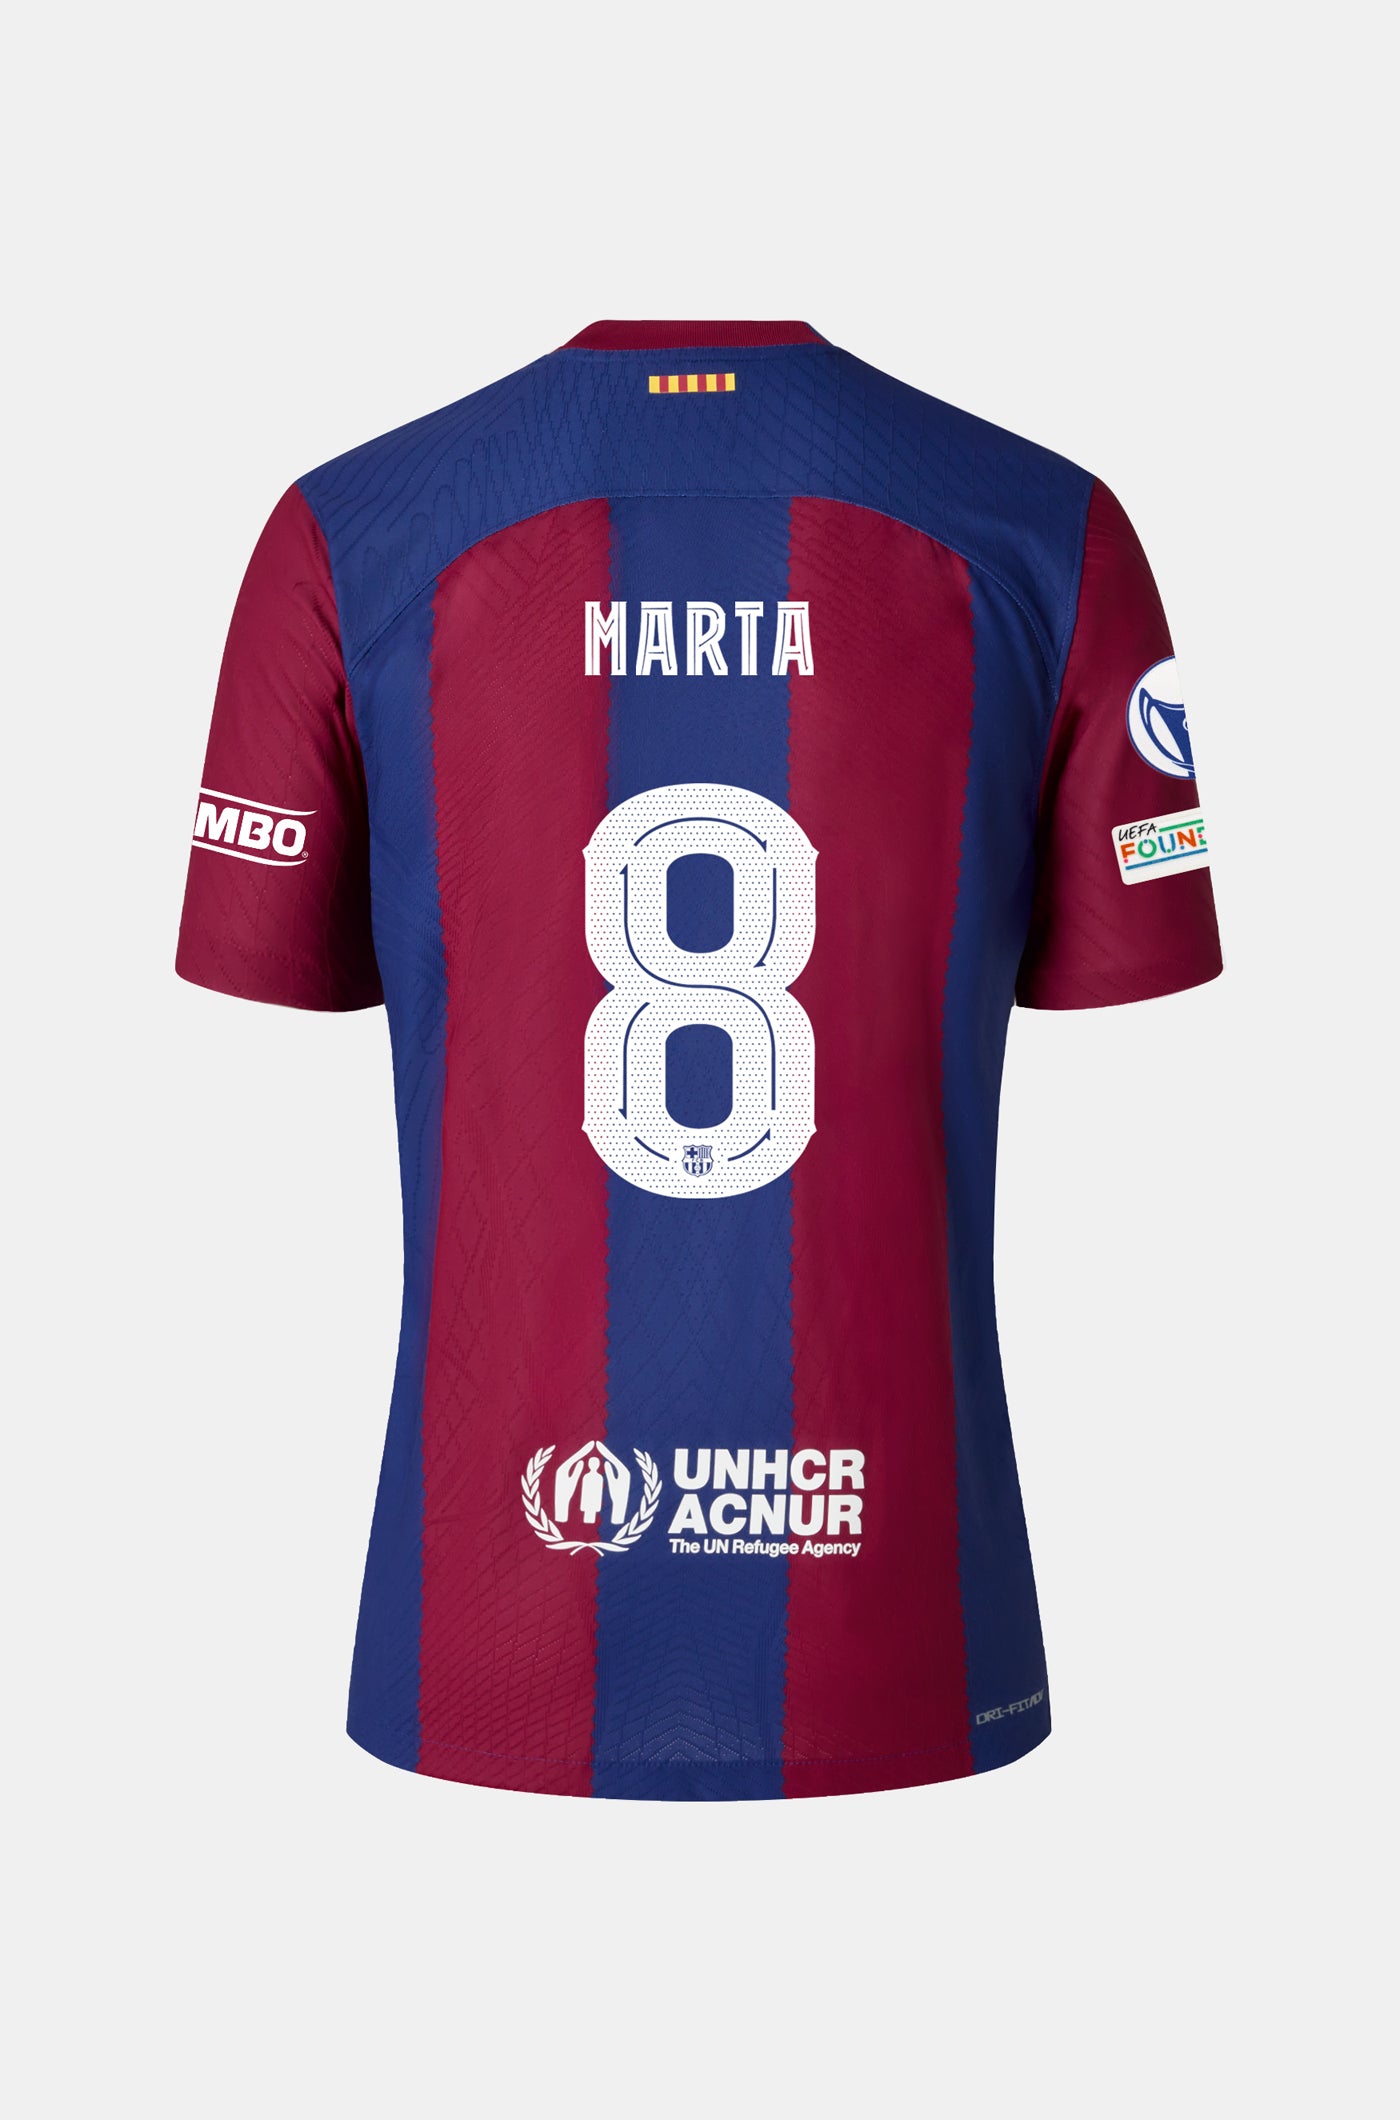 UWCL FC Barcelona home shirt 23/24 Player's Edition  - MARTA